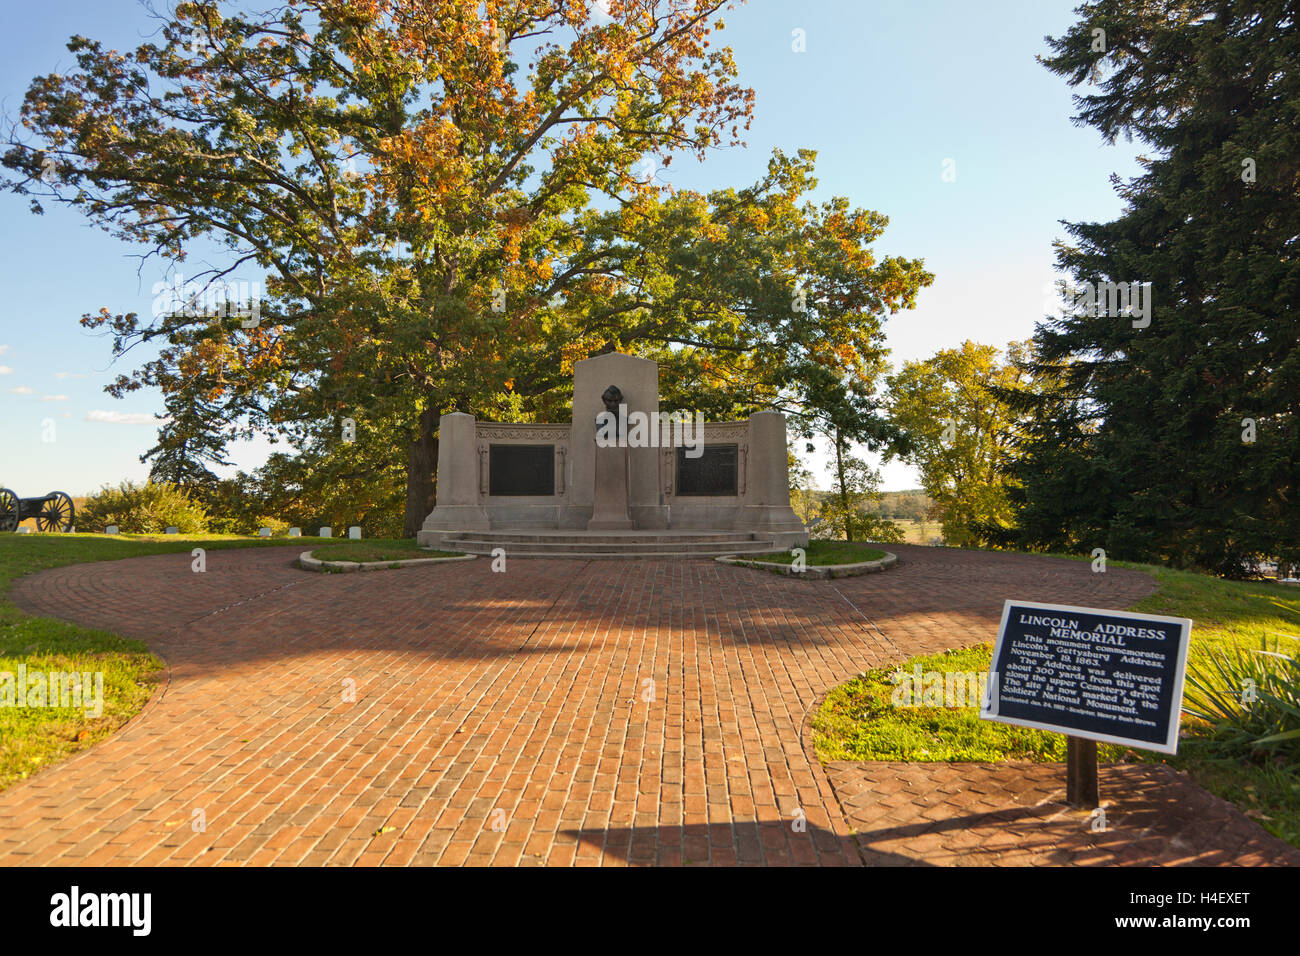 Lincoln-Adresse-Denkmal an der Soldaten Staatsangehörig-Kirchhof, Gettysburg National Military Park, Pennsylvania, USA Stockfoto